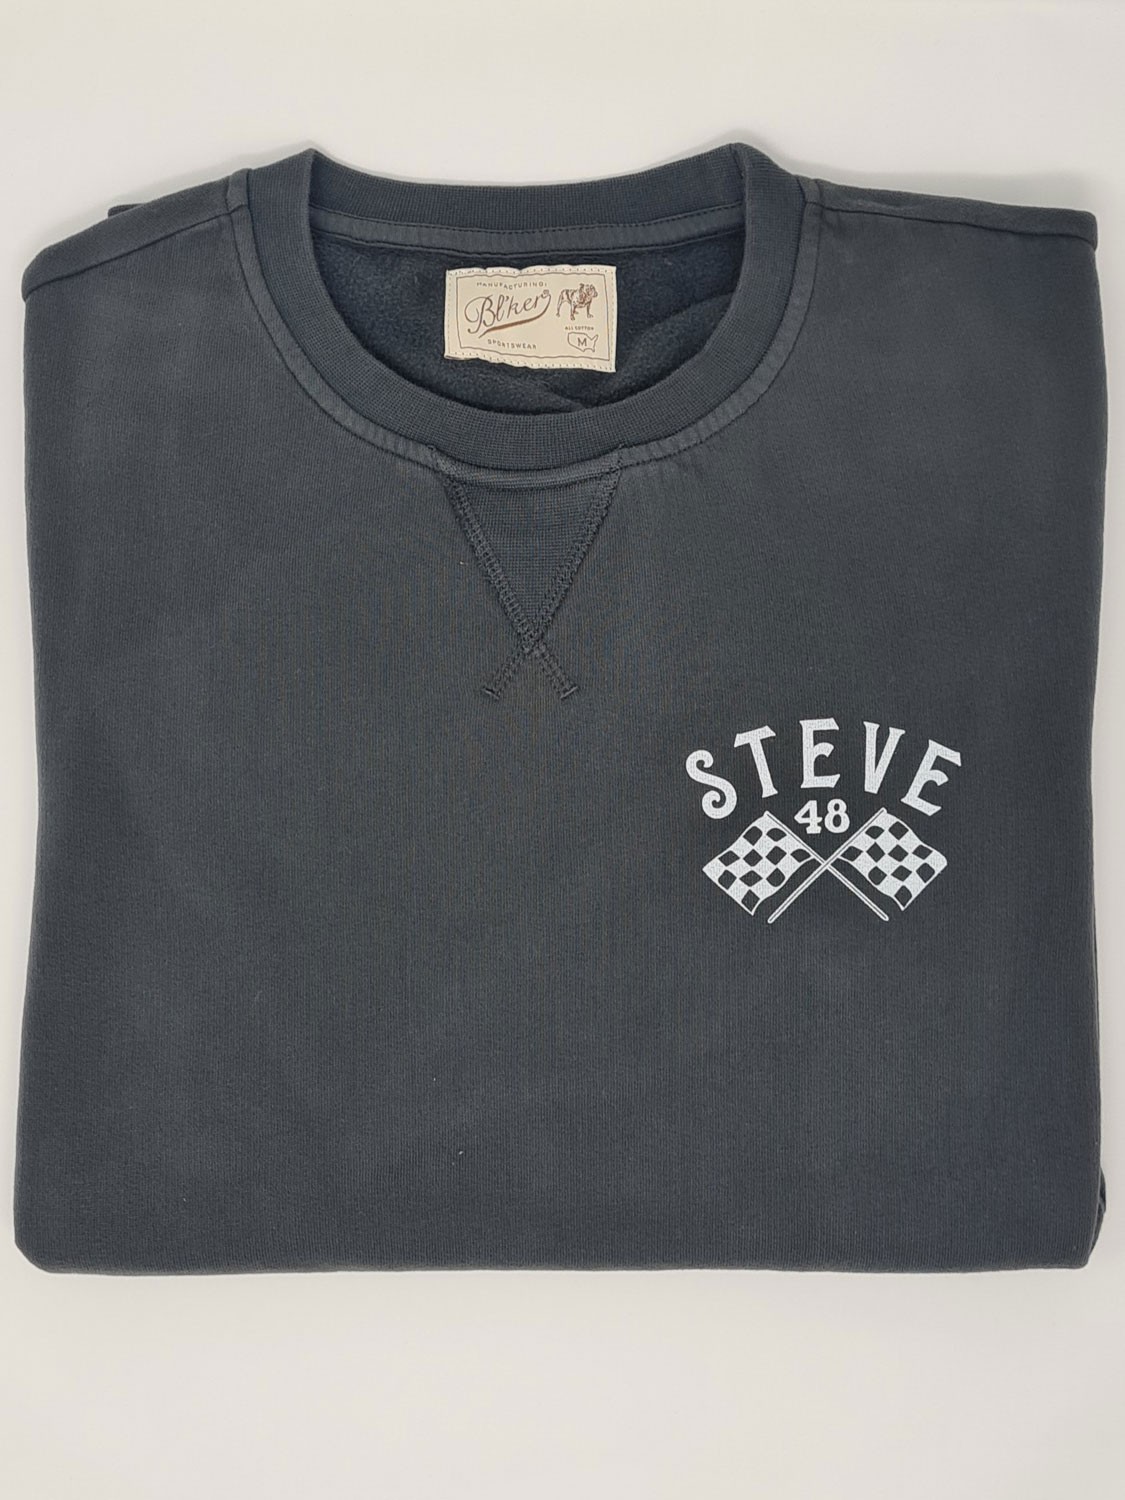 Bl'ker Men's Sweatshirt Graphic Steve 48